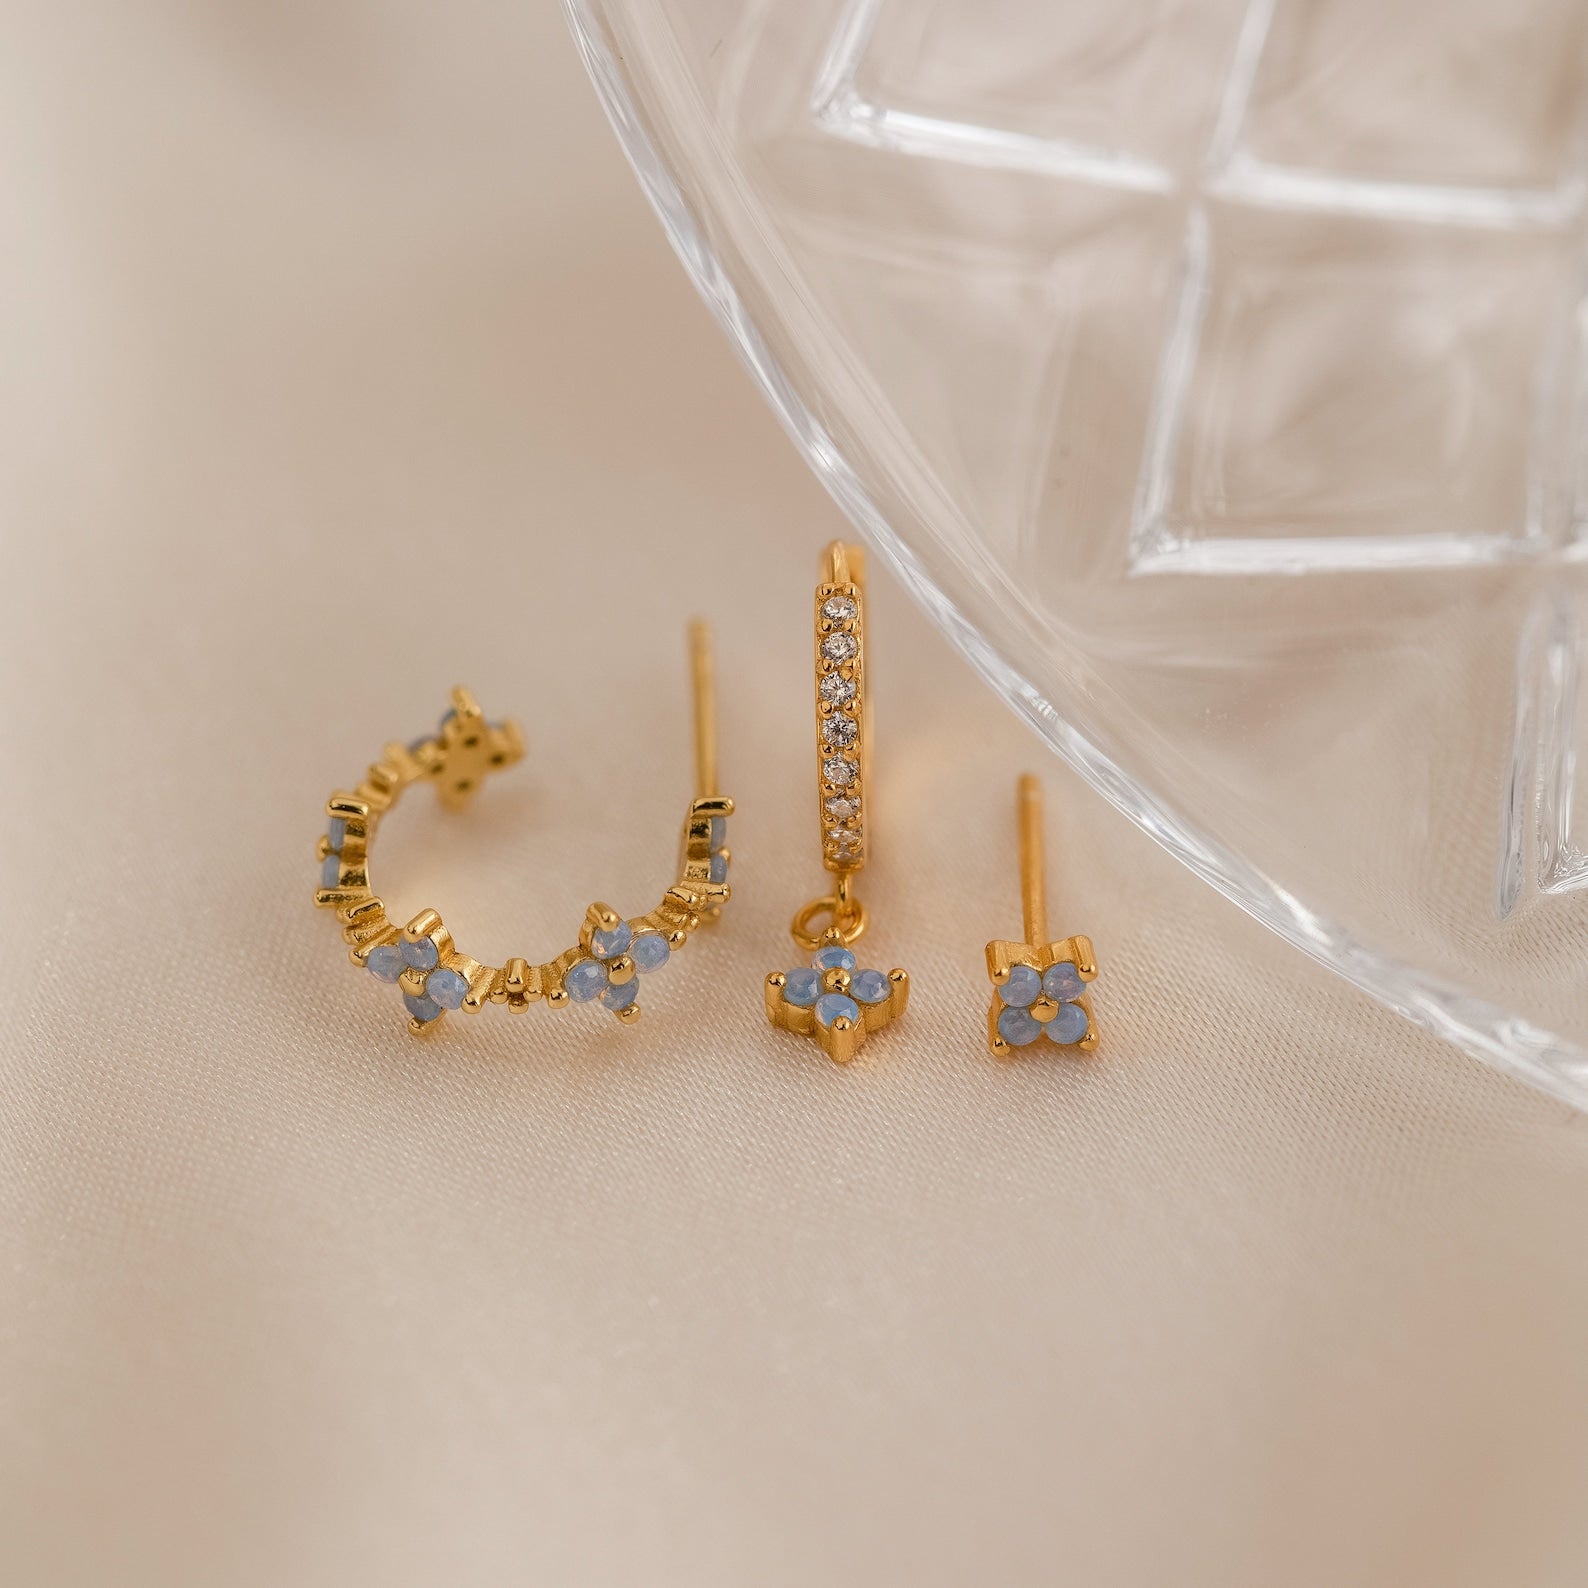 Joyalukkas 22k (916) Yellow Gold Stud Earrings for Girls : Amazon.in:  Fashion